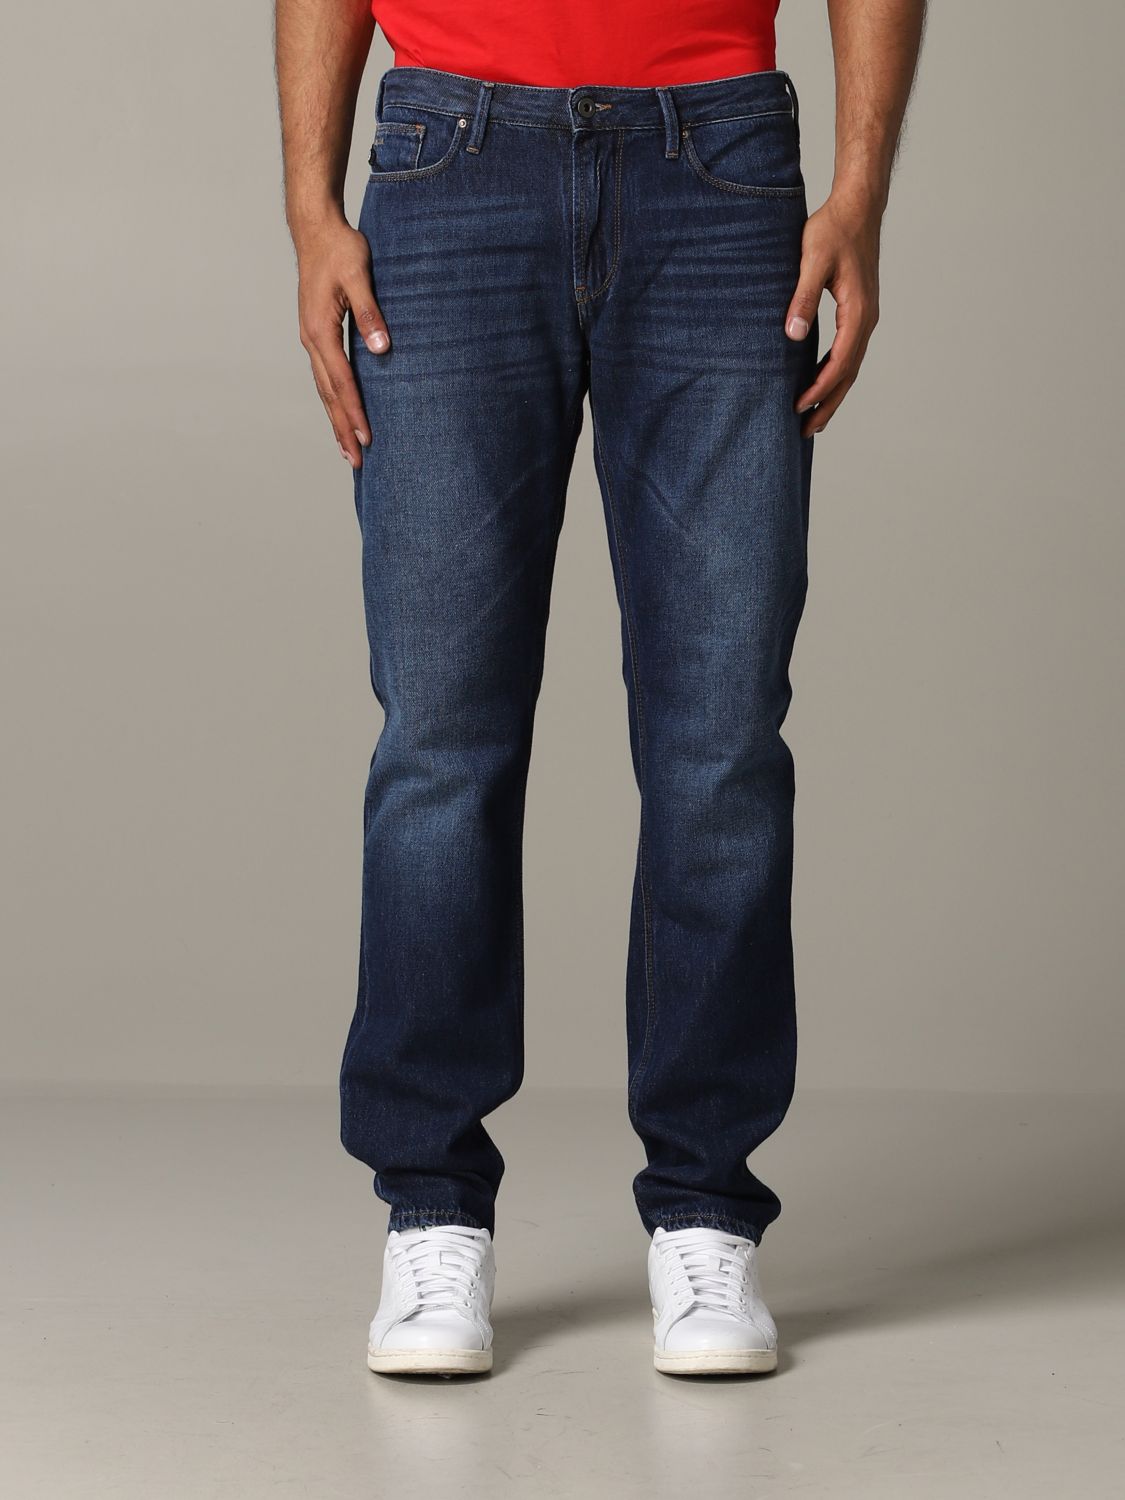 Emporio Armani Outlet: slim fit jeans 8 oz - Stone Washed | Emporio ...